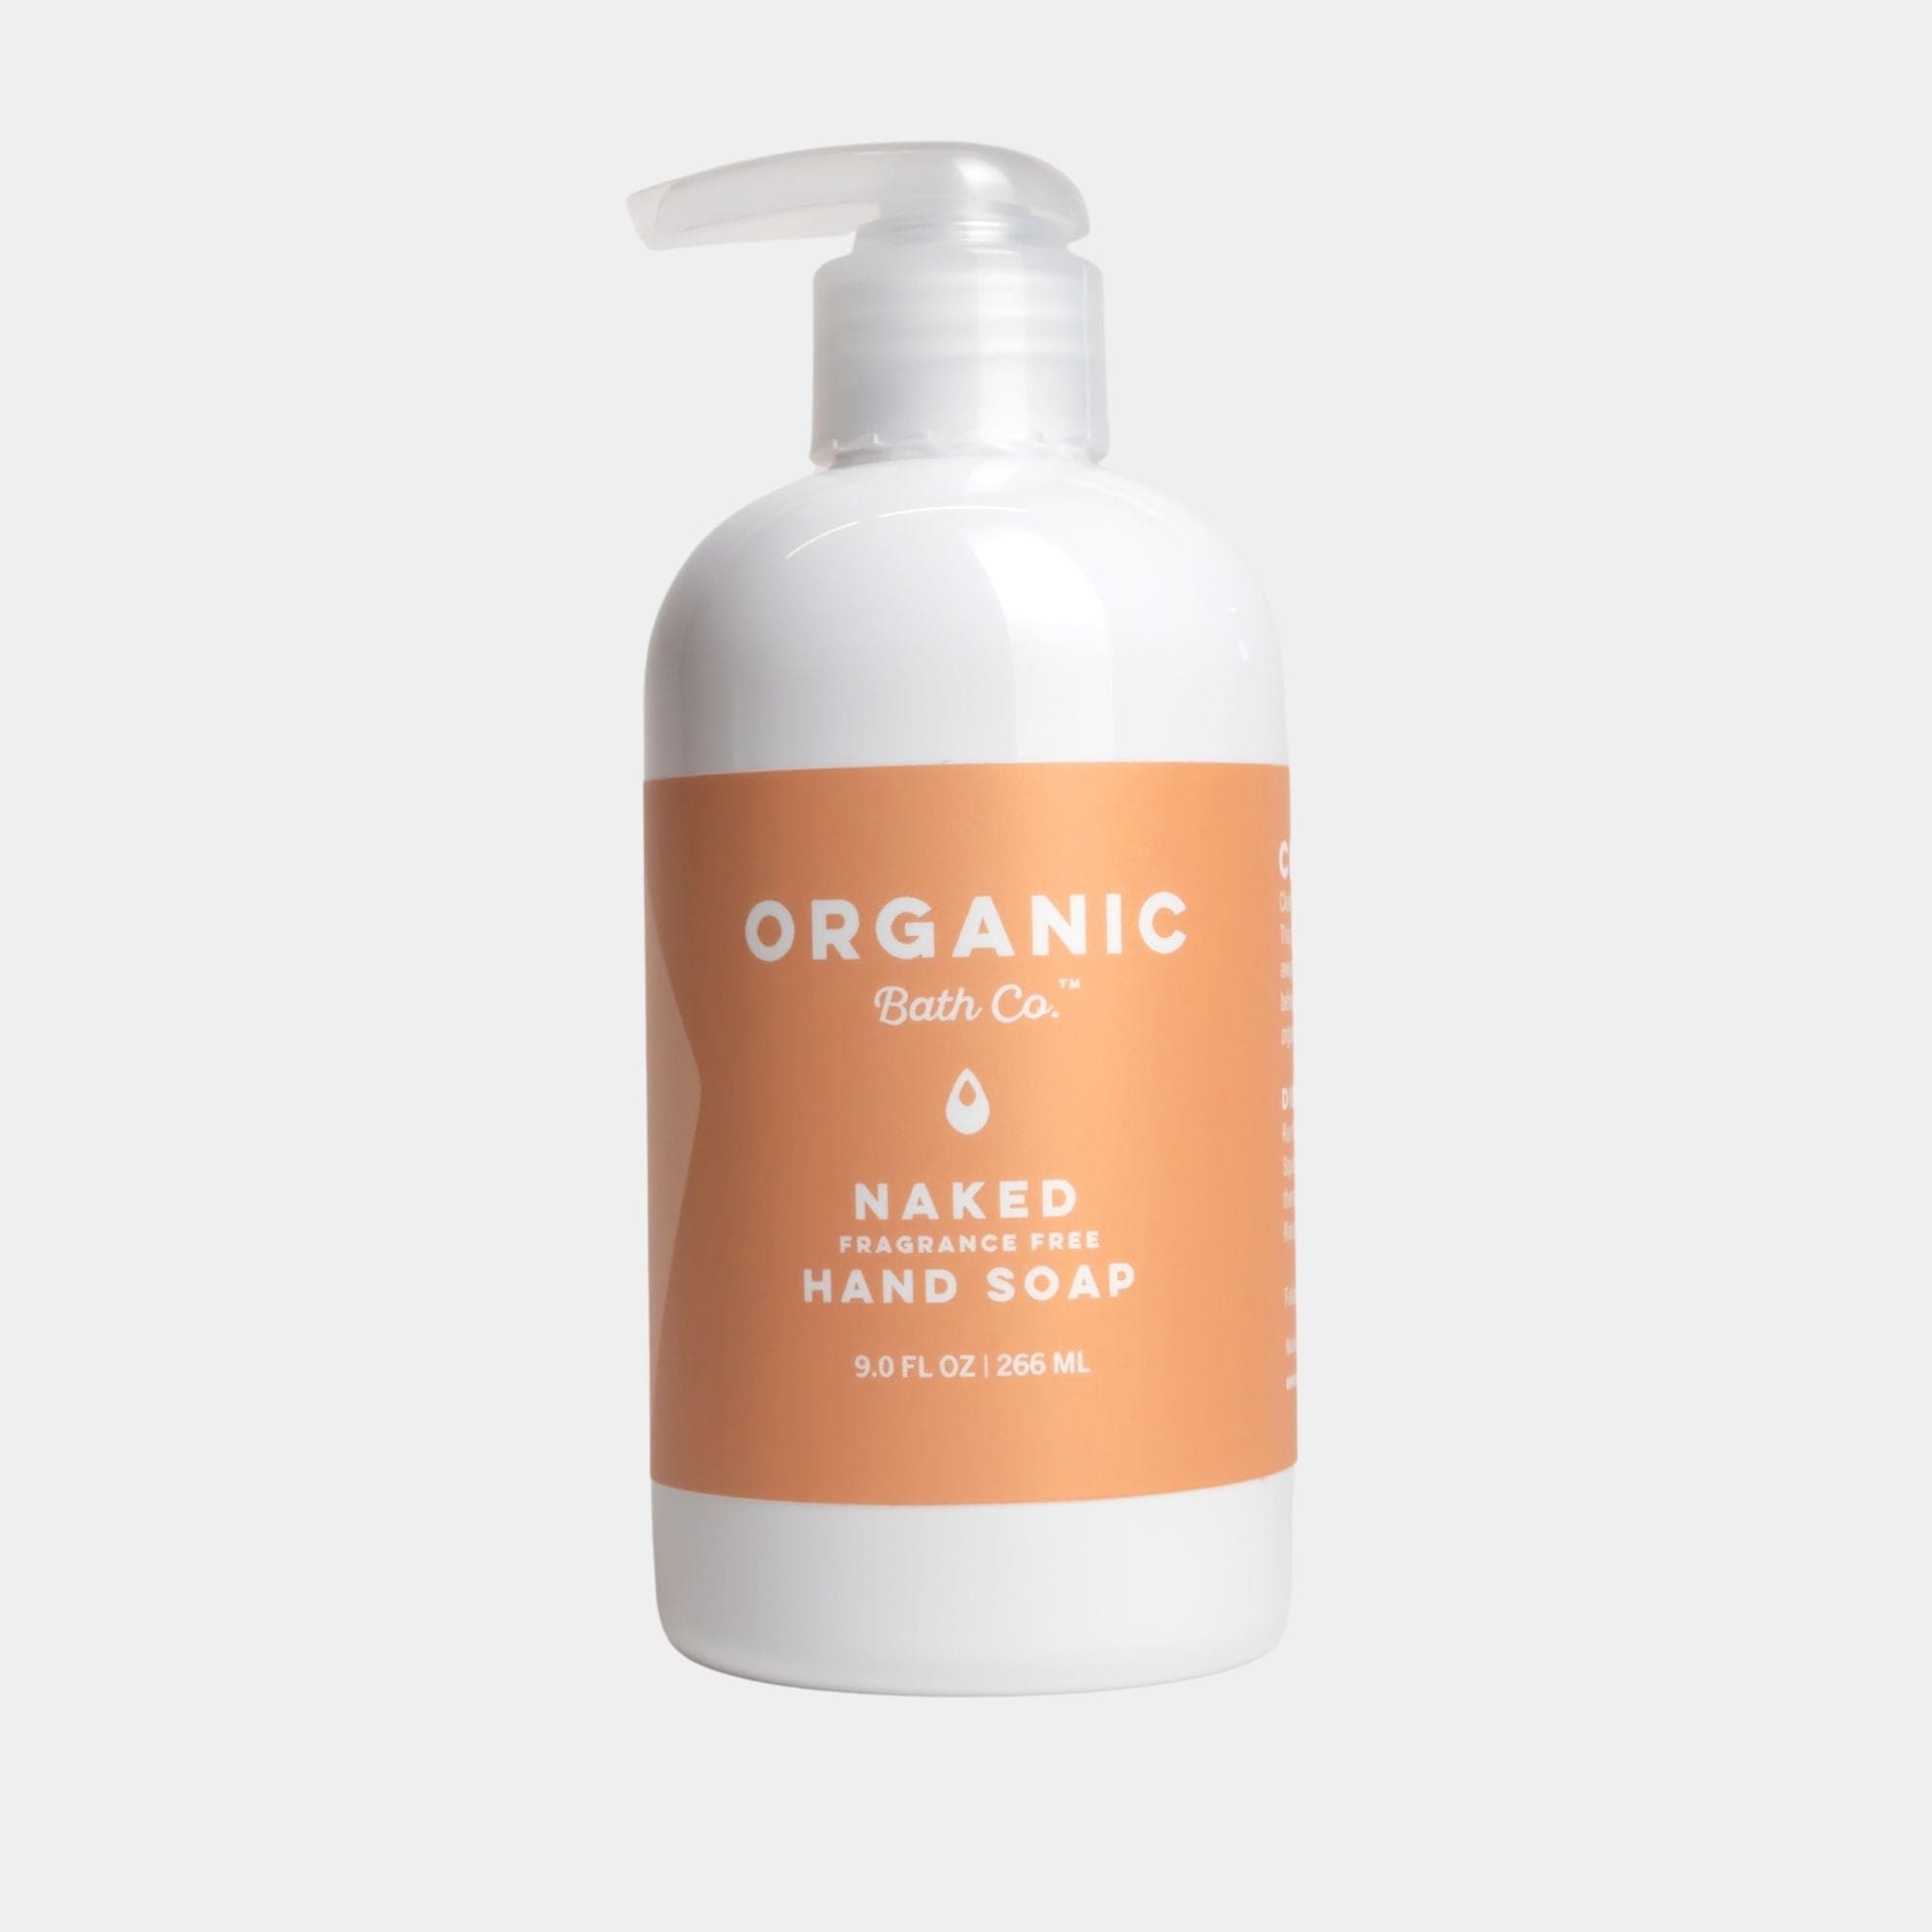 Naked Hand Soap - Organic Bath Co.